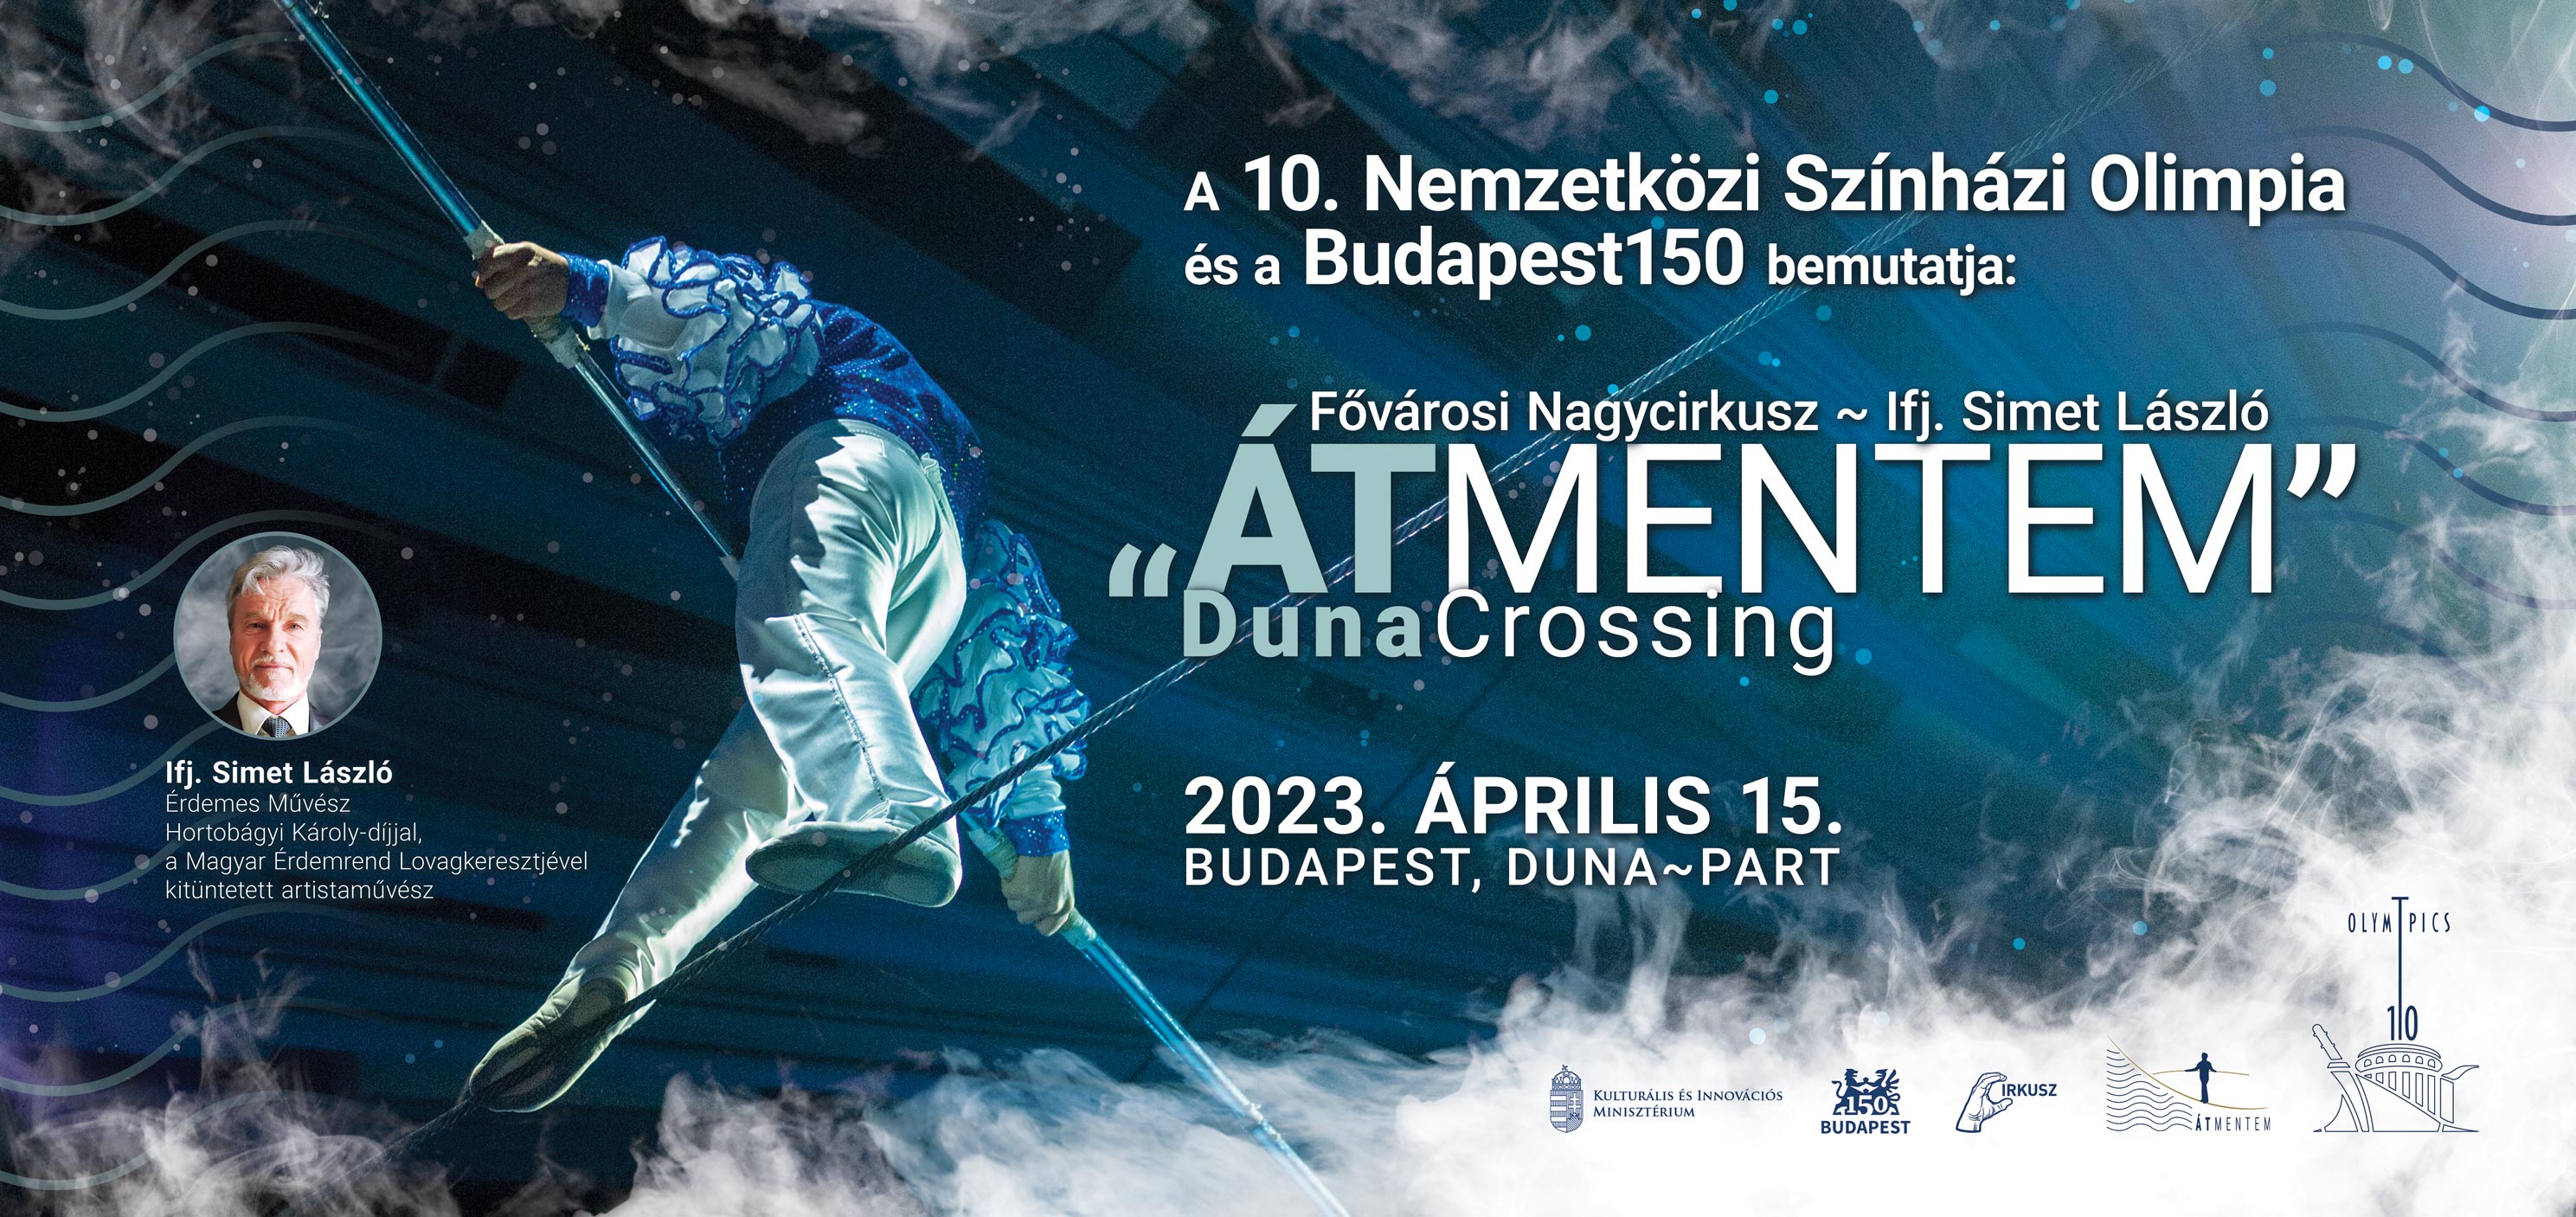 Átmentem - Artist walks a tightrope across the Danube